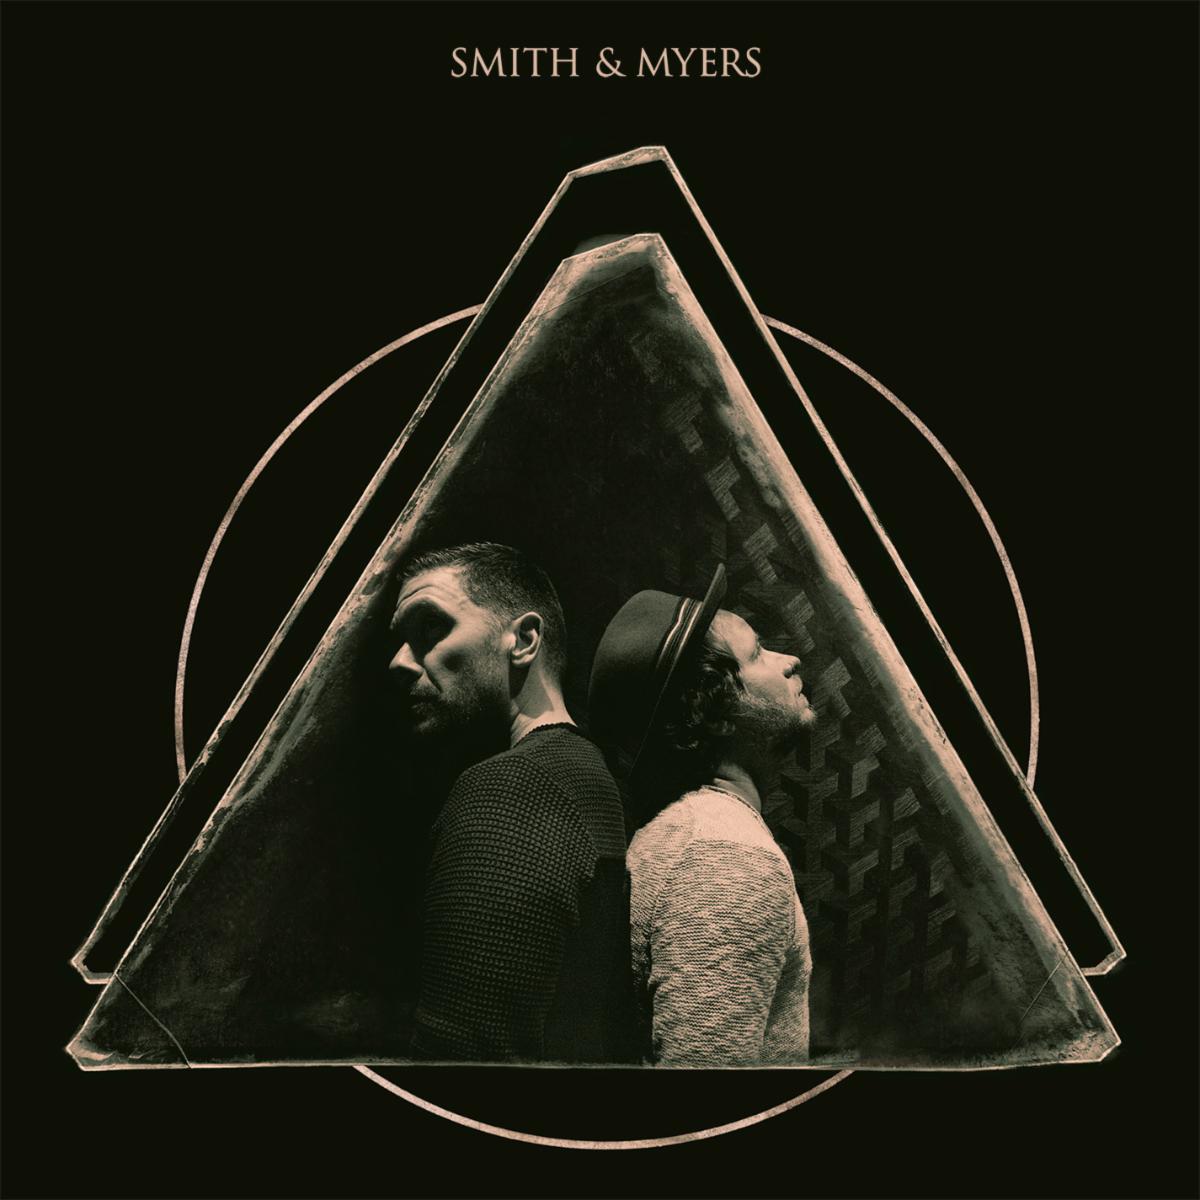 Brent Smith & Zach Myers (Smith & Myers) Release New Album Smith & Myers Volume 2